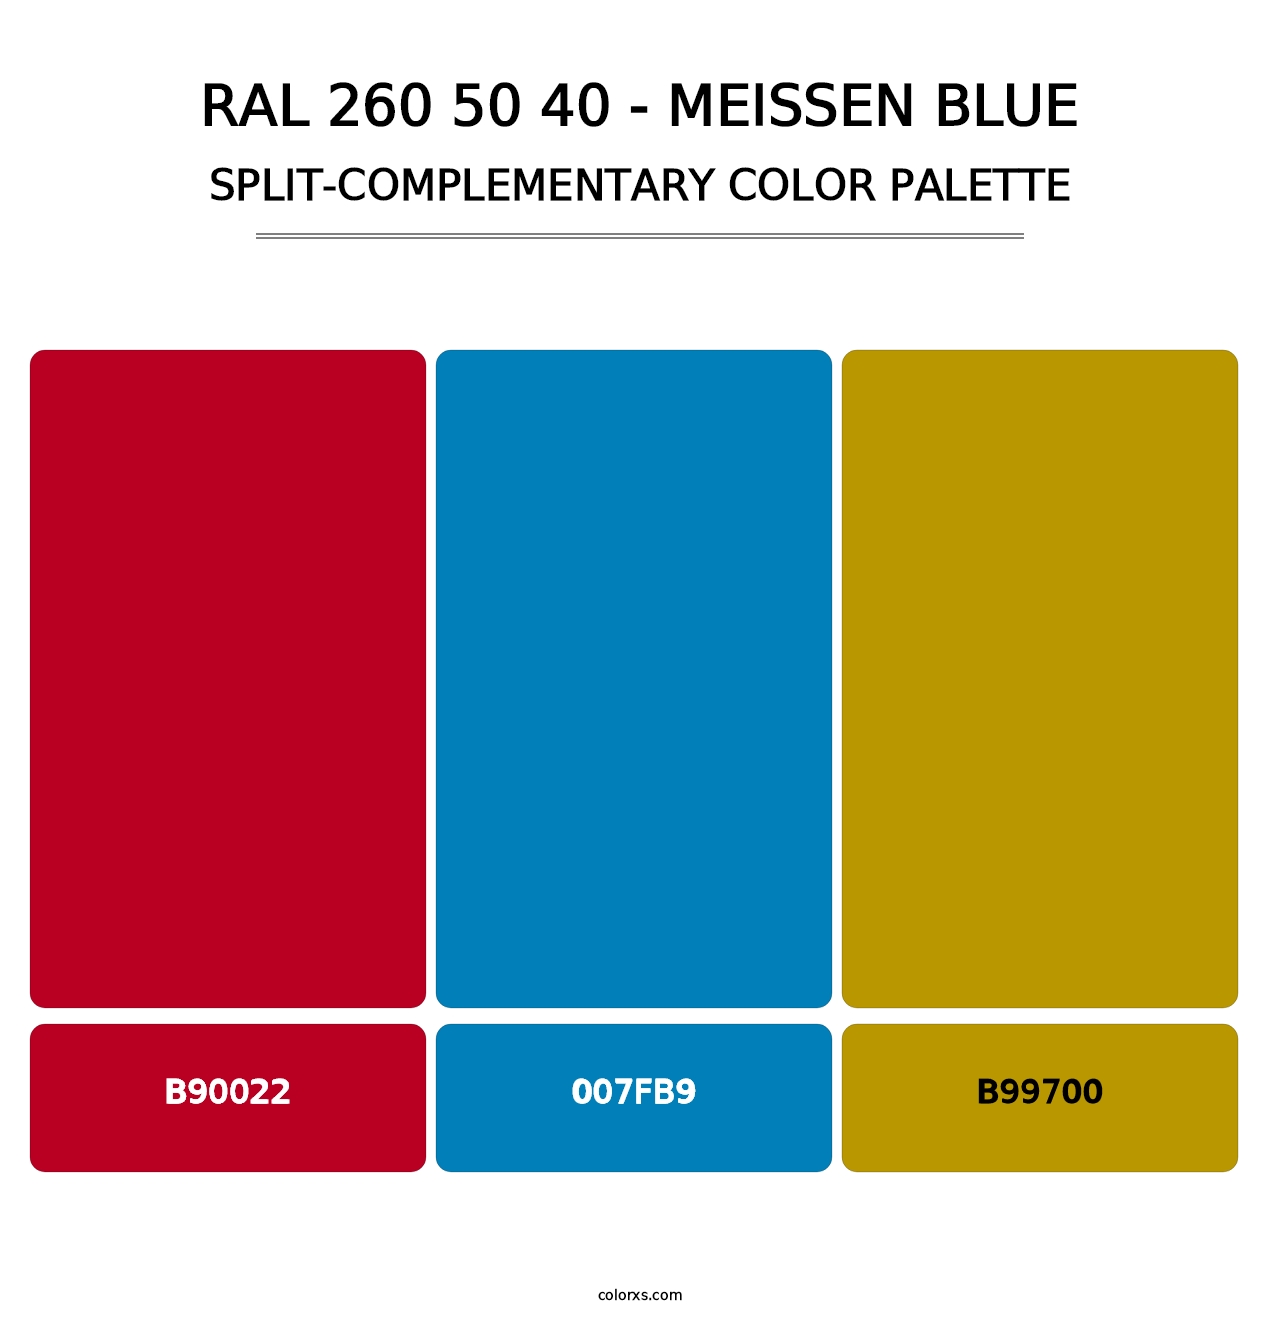 RAL 260 50 40 - Meissen Blue - Split-Complementary Color Palette